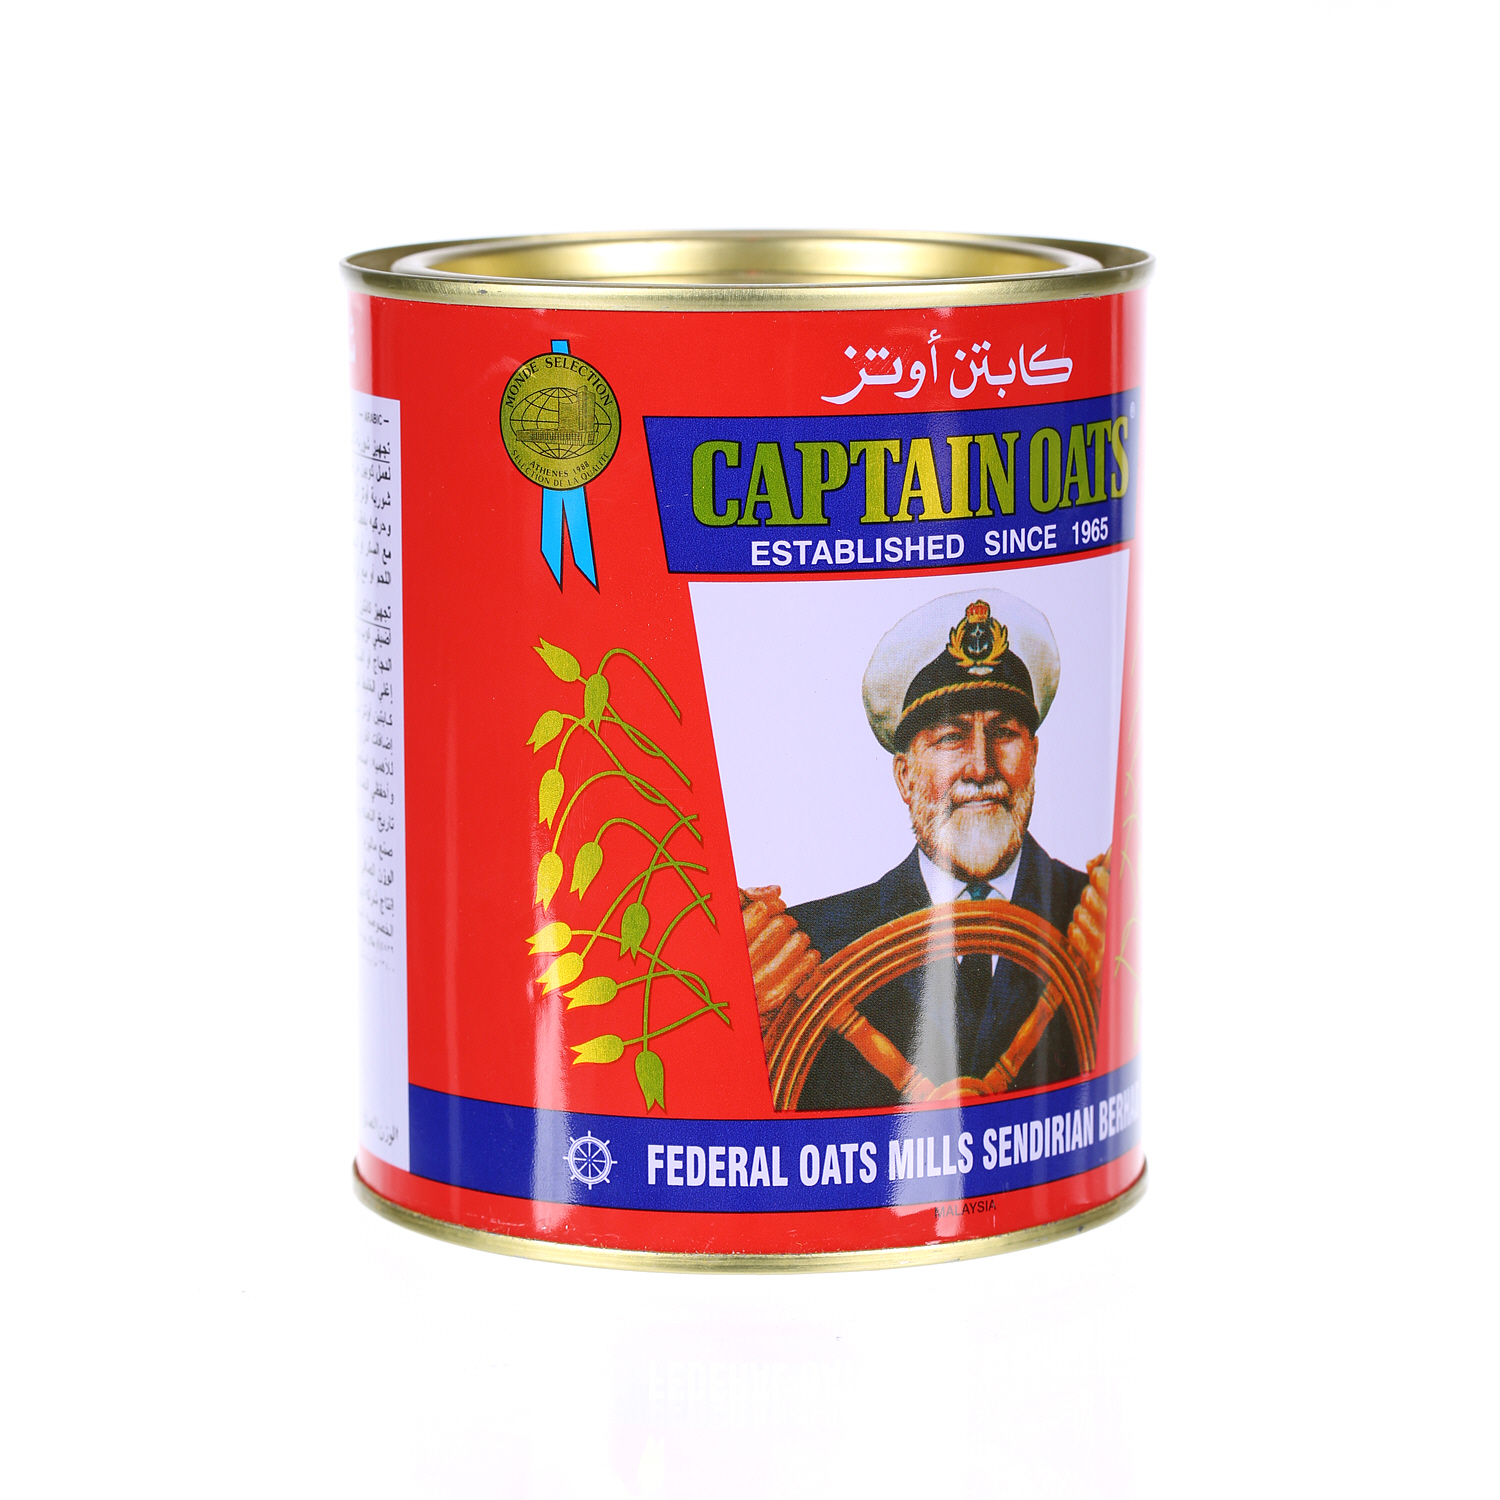 Captain Oats Tin 500 g